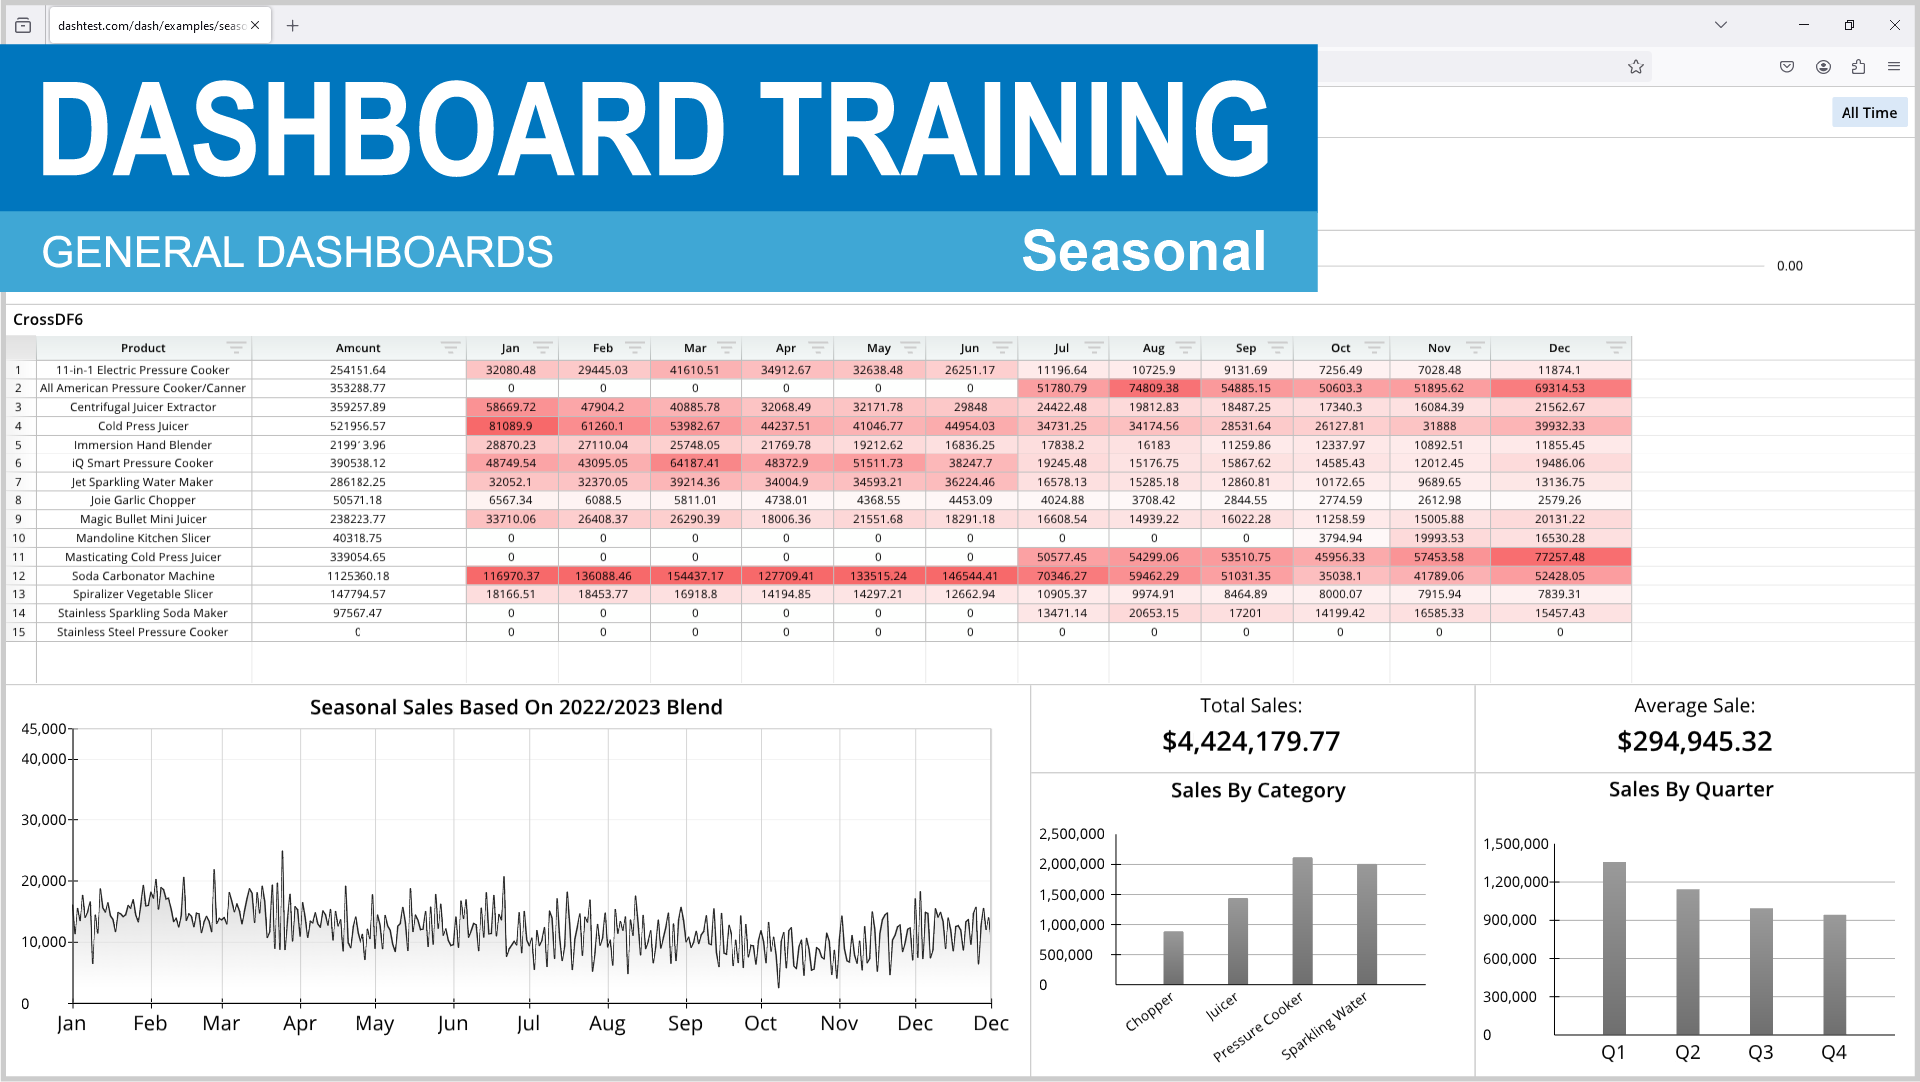 A screenshot of a dashboard training program, featuring a seasonal summary of sales.